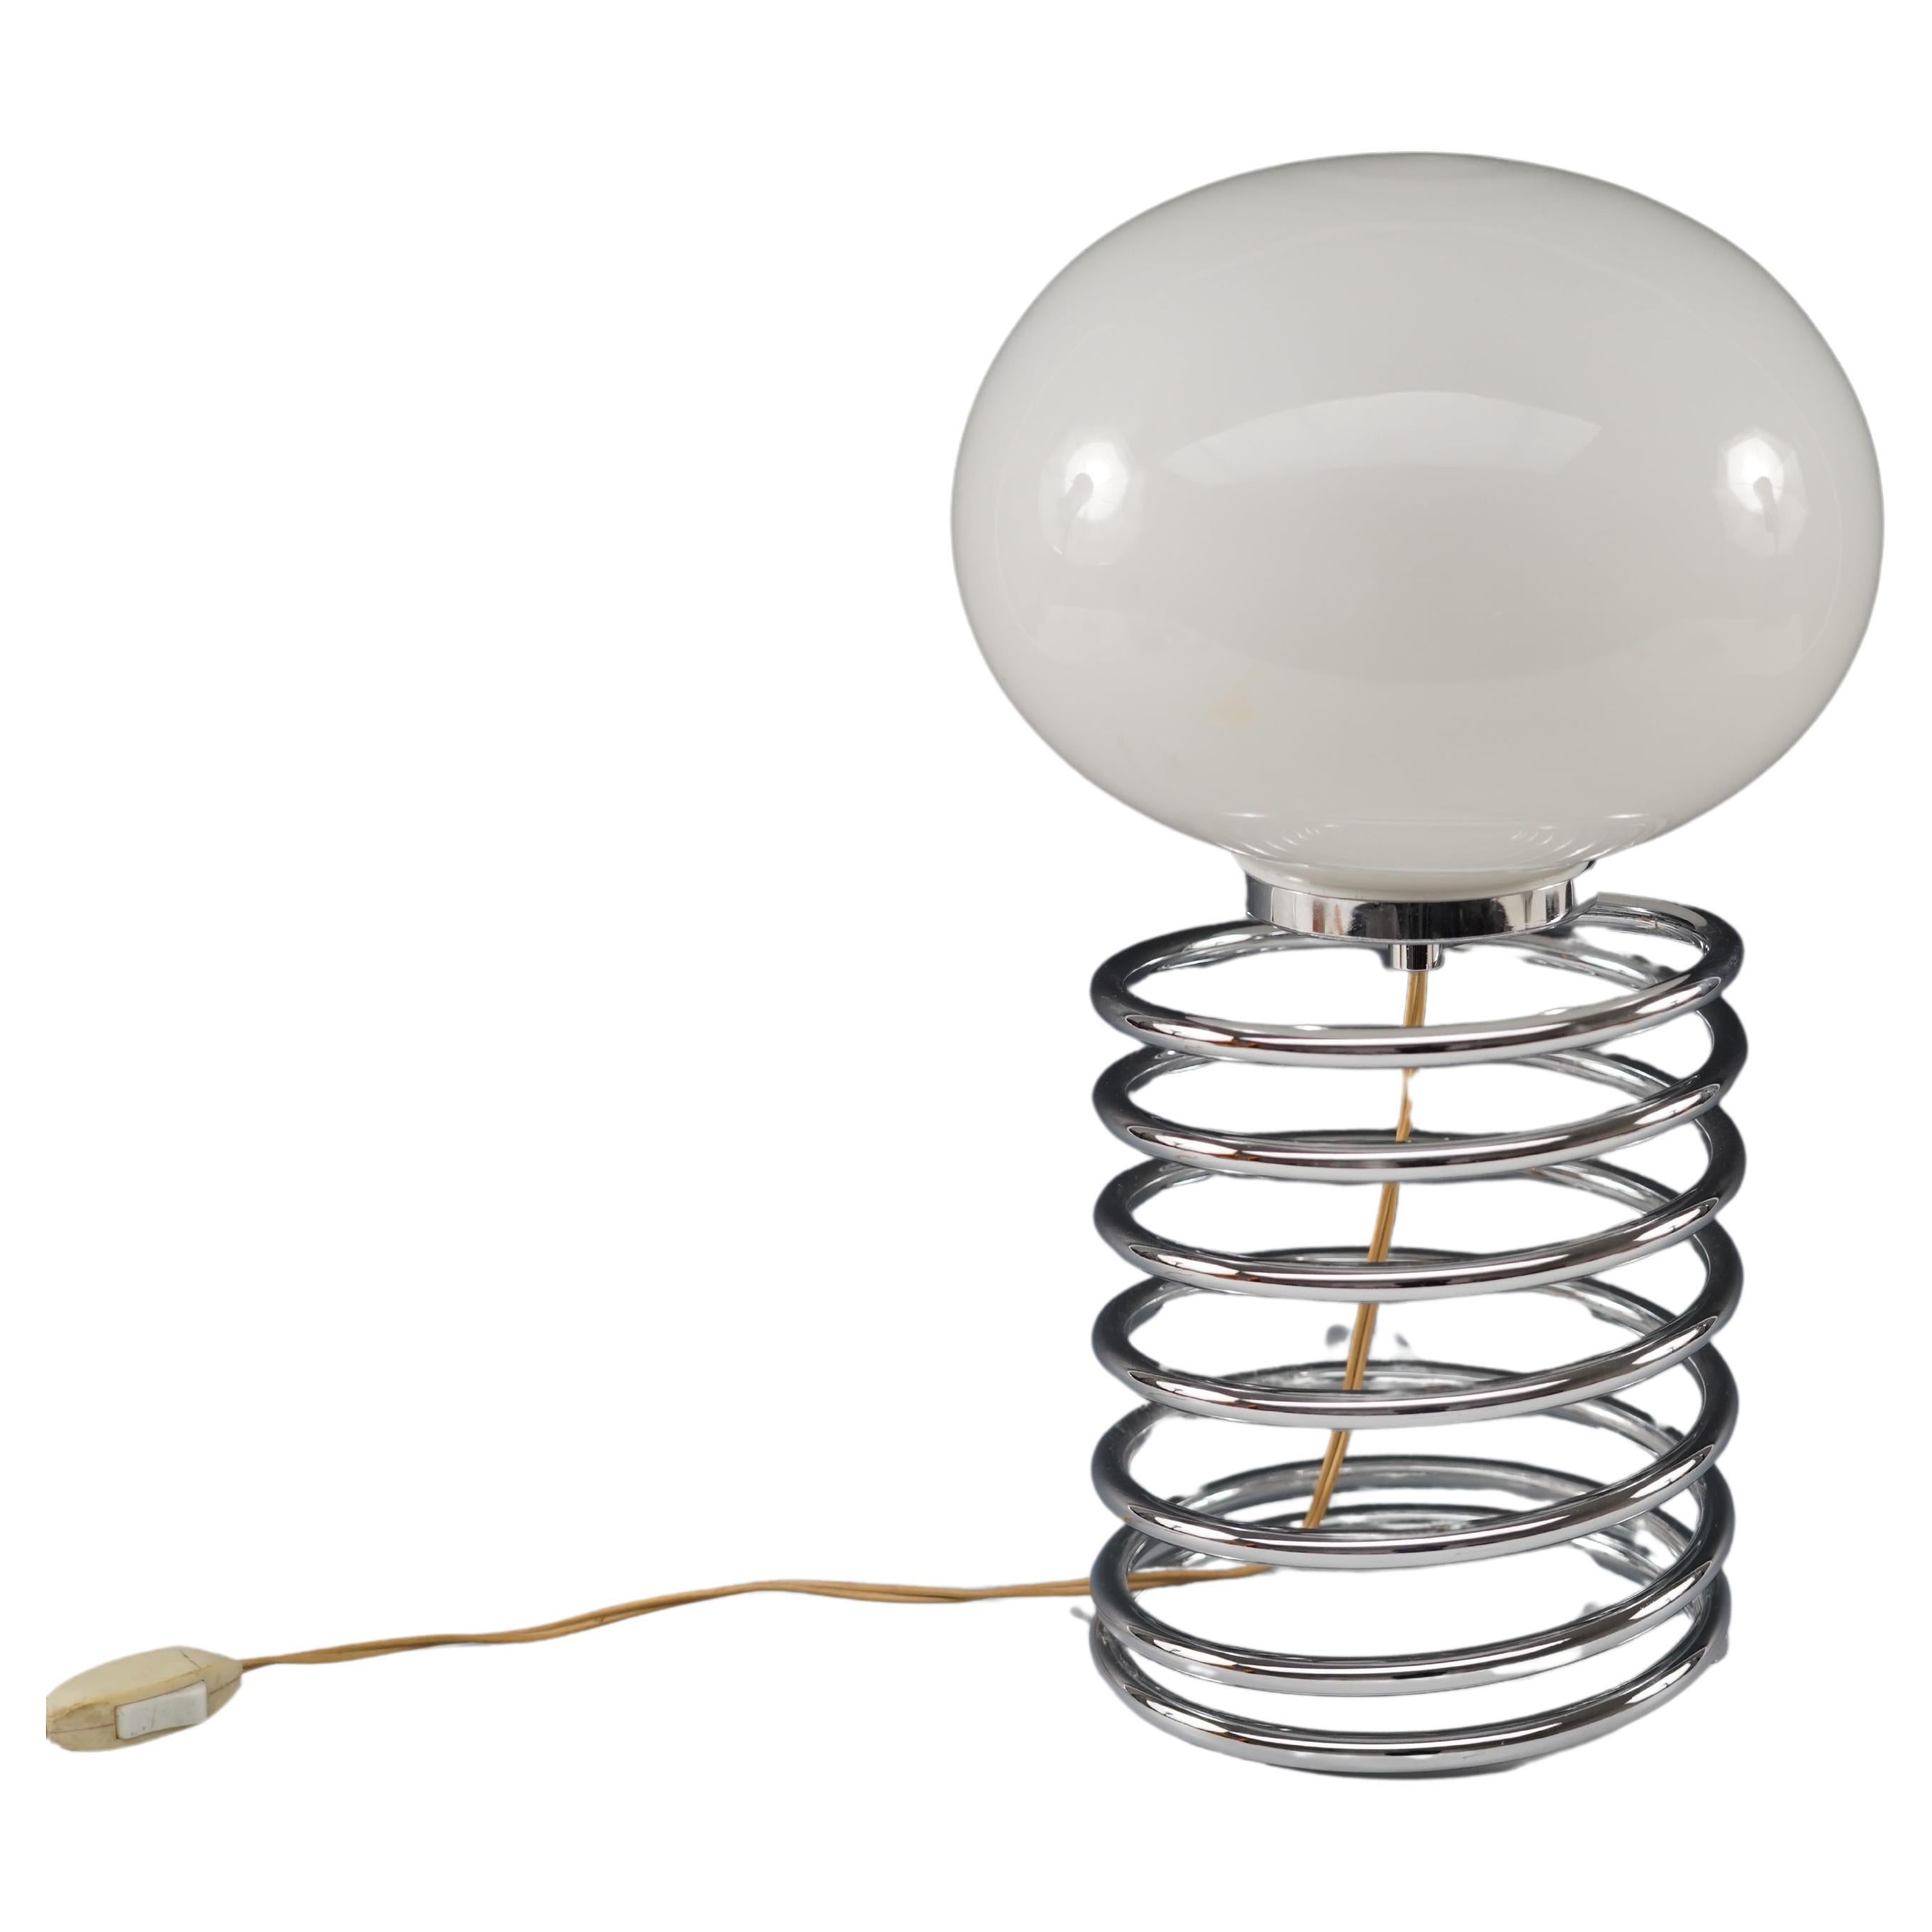 “Spiral” Lamp by Ingo Maurer for Design M, Germany, circa 1966